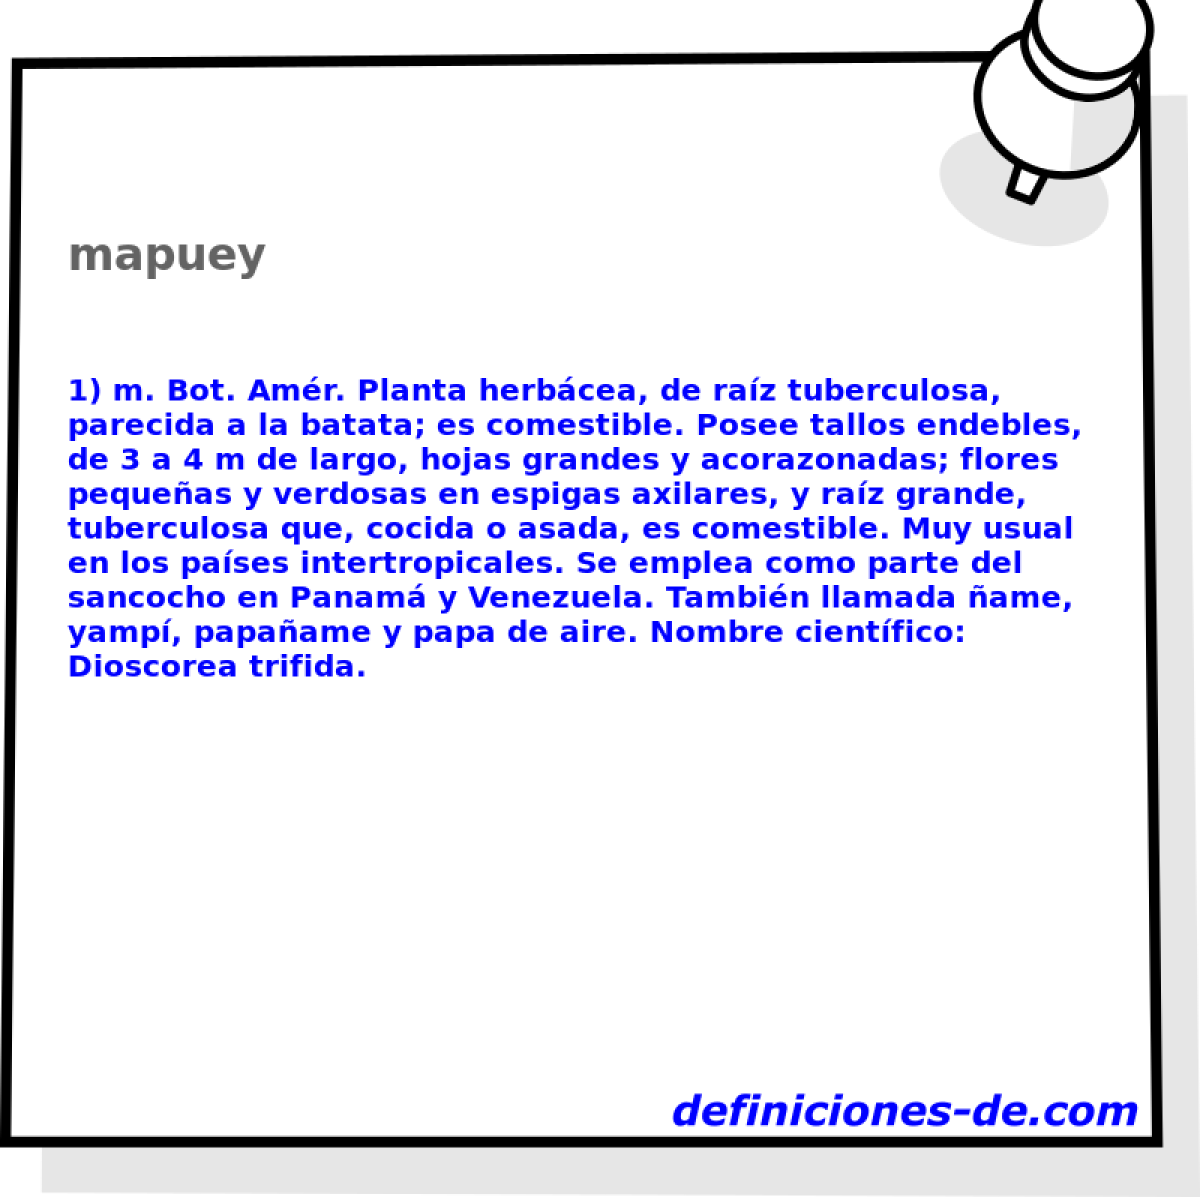 mapuey 